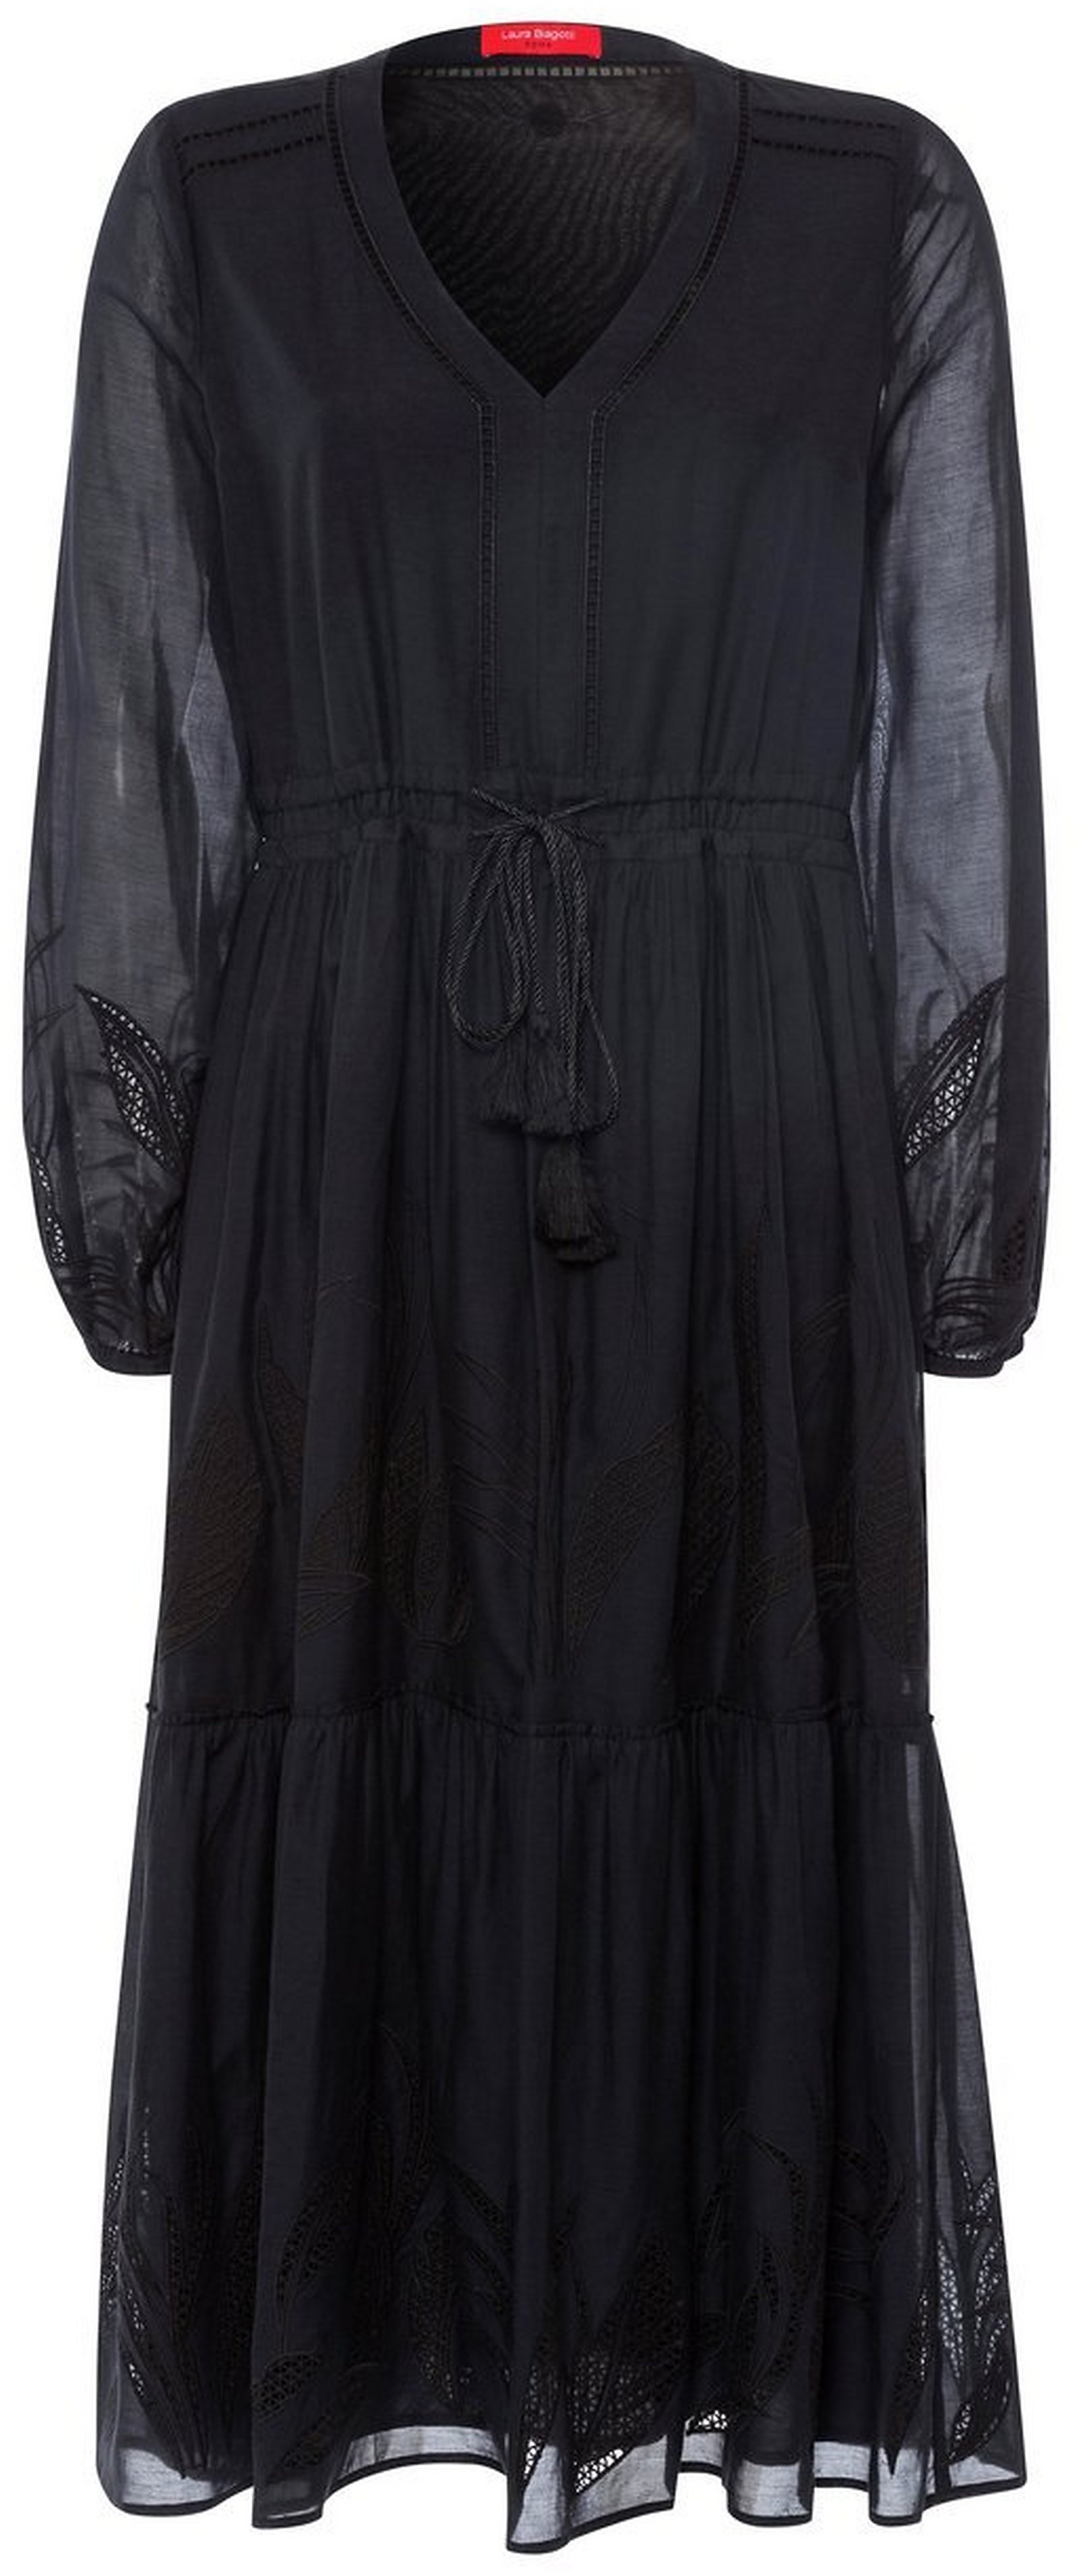 La robe  Laura Biagiotti Roma noir